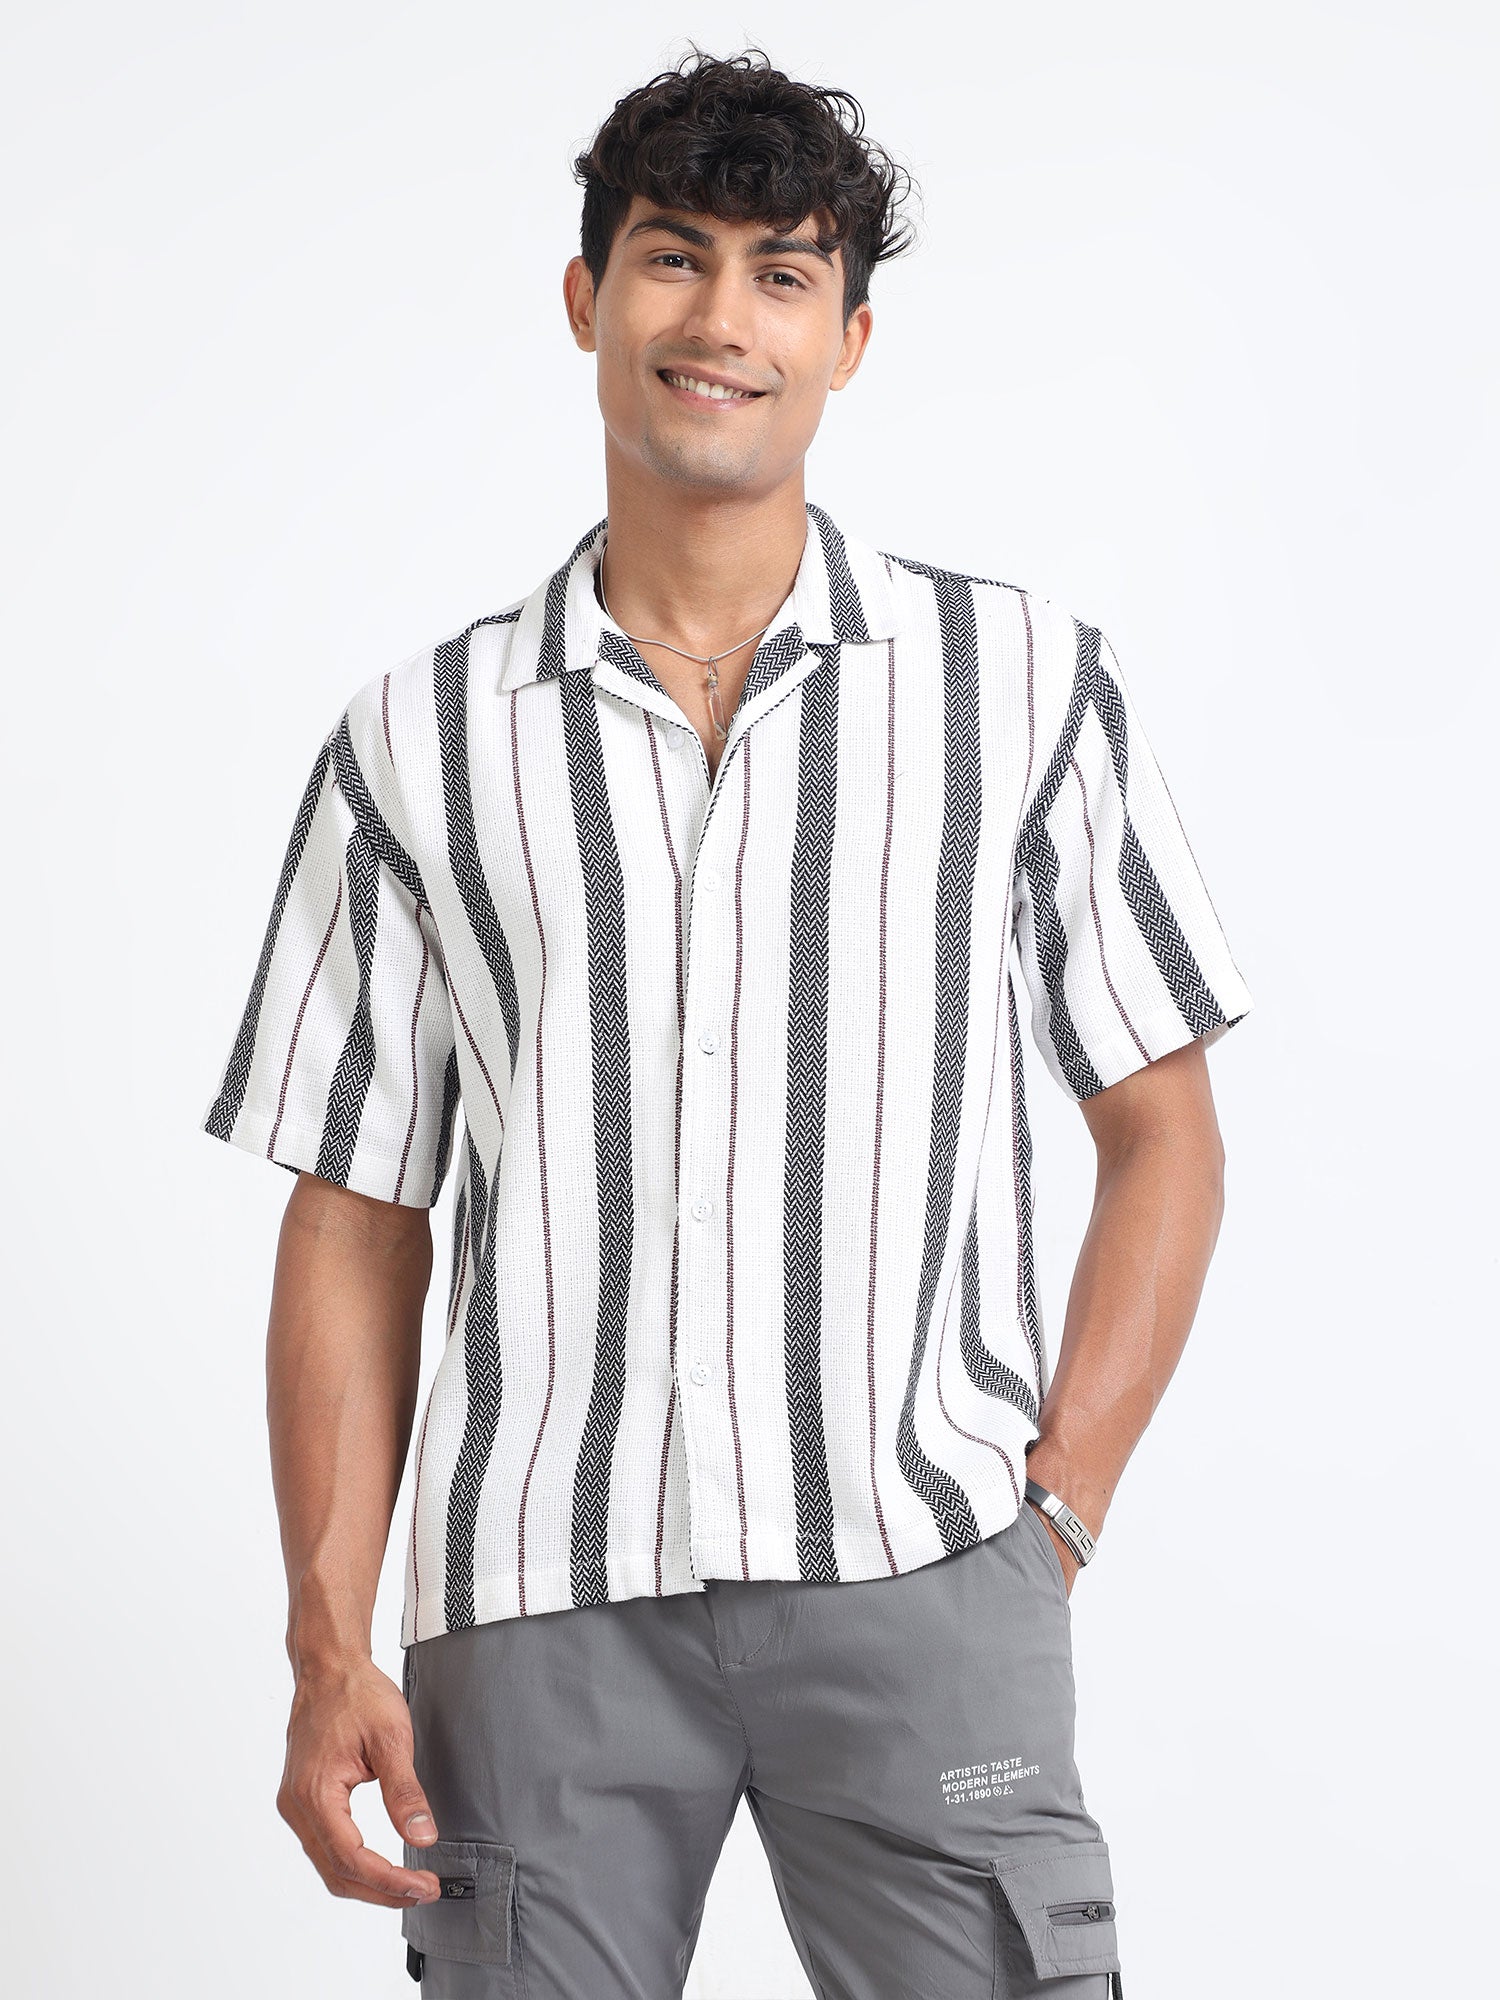 Zelos Mens T-Shirt Athletic Large Gray Striped Short Sleeve L